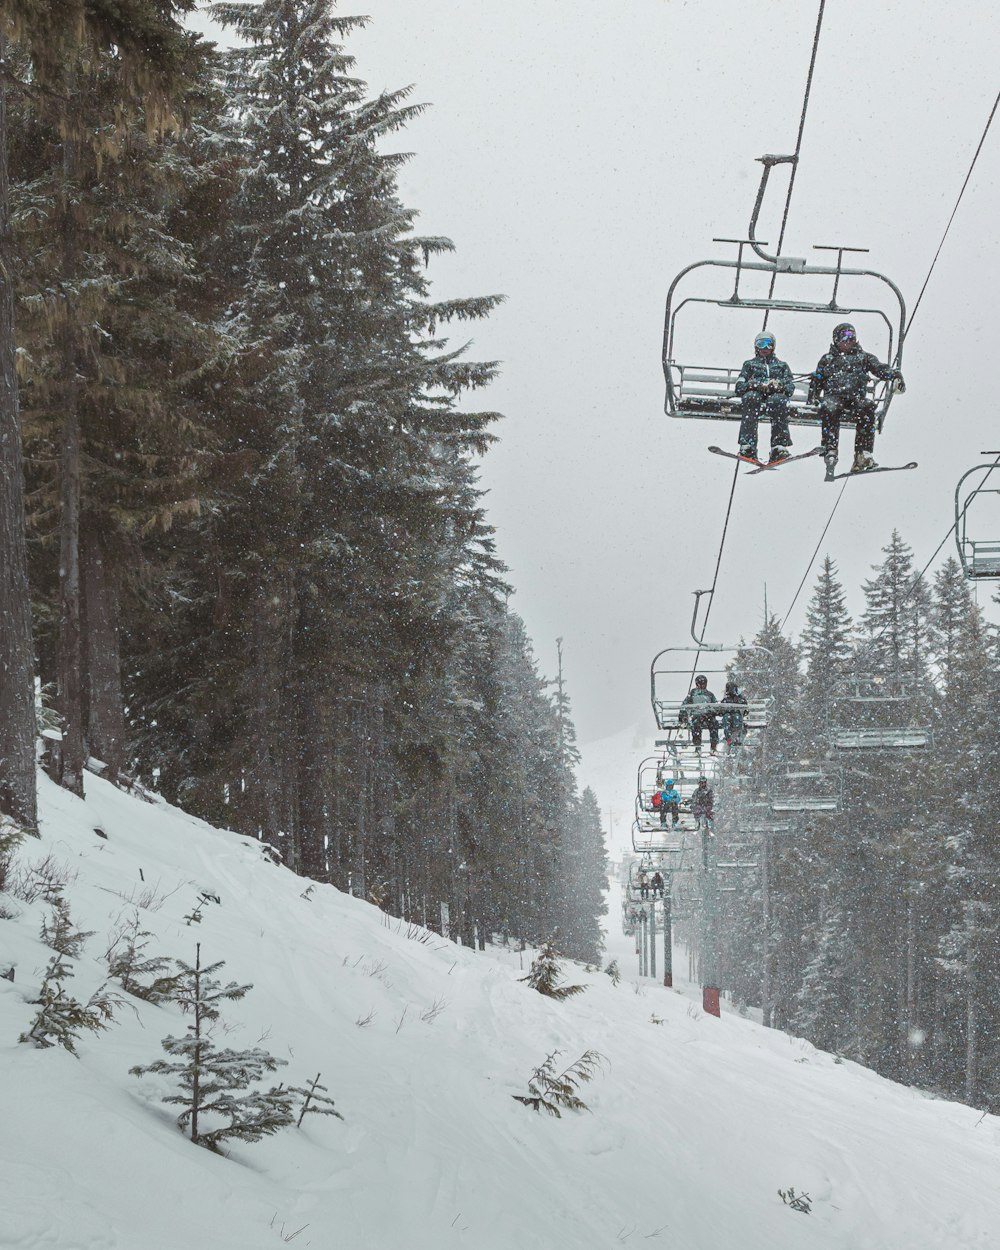 a couple of people riding a ski lift